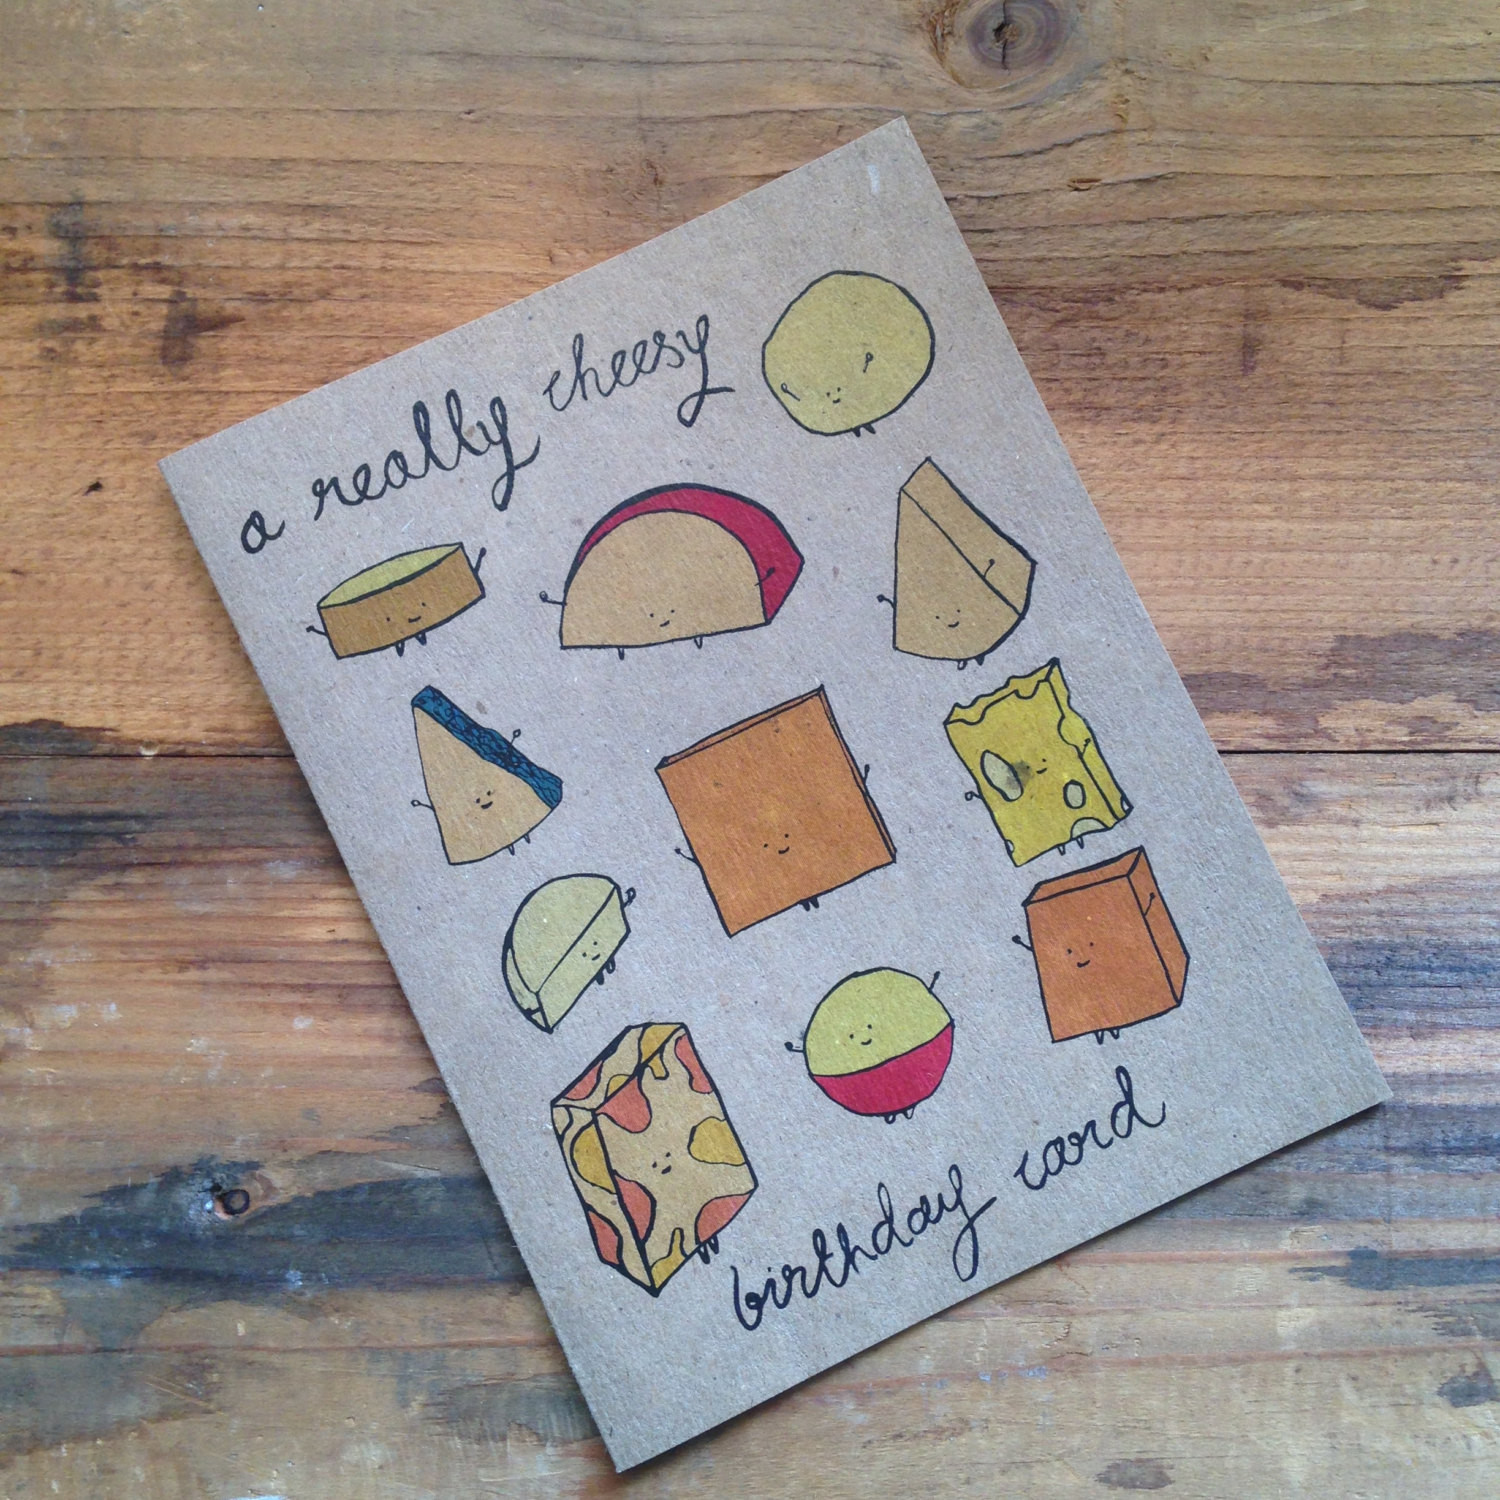 Cheesy Birthday Cards
 A Really Cheesy Birthday Card by DesireeB on Etsy